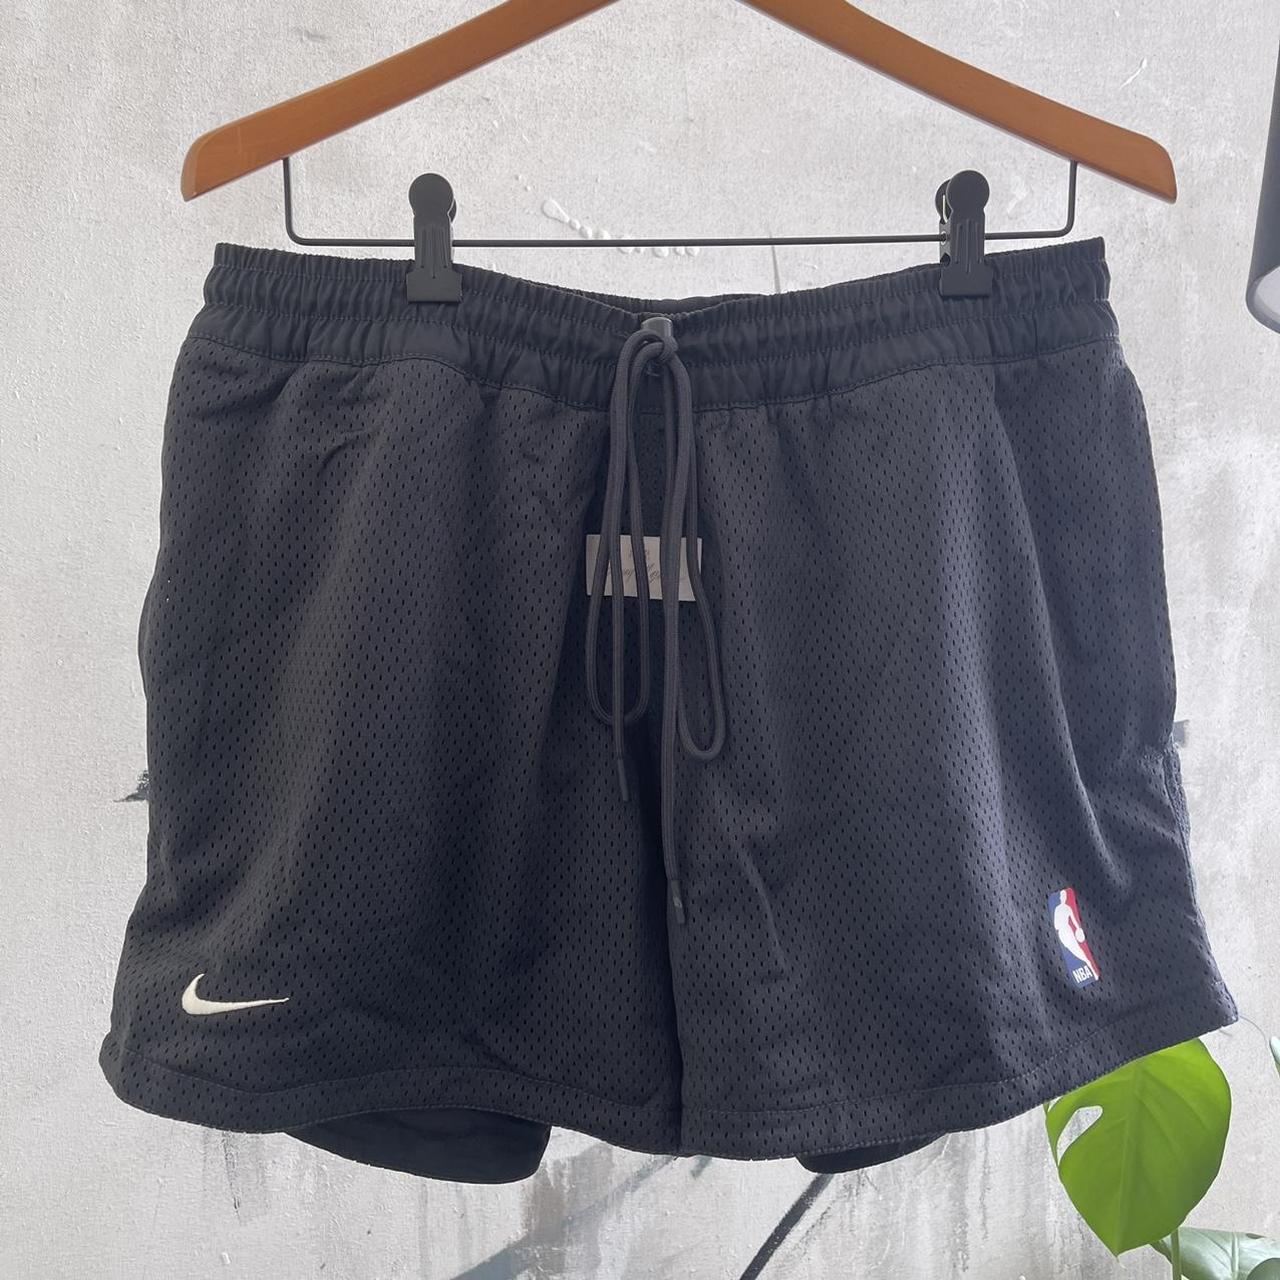 FEAR OF GOD x Nike Basketball Shorts Off Noir